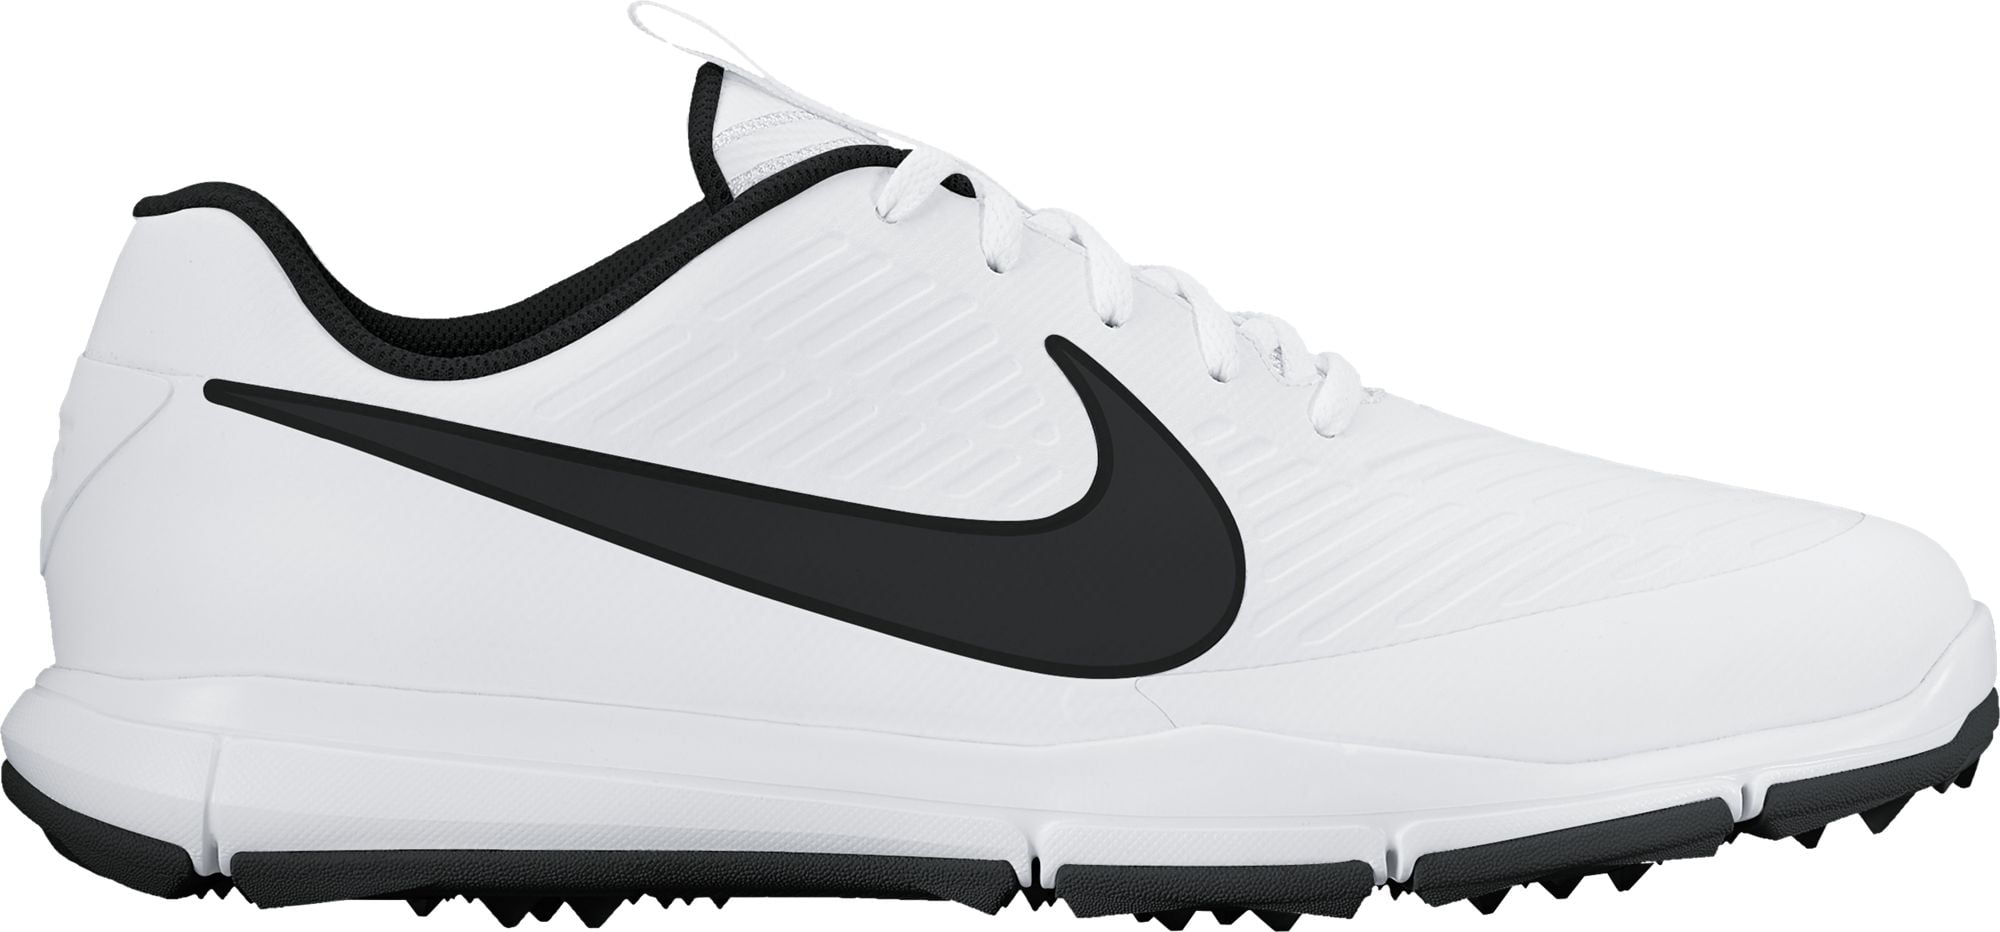 Nike 2017 Explorer 2 Golf Shoes (White/Black) - Walmart.com